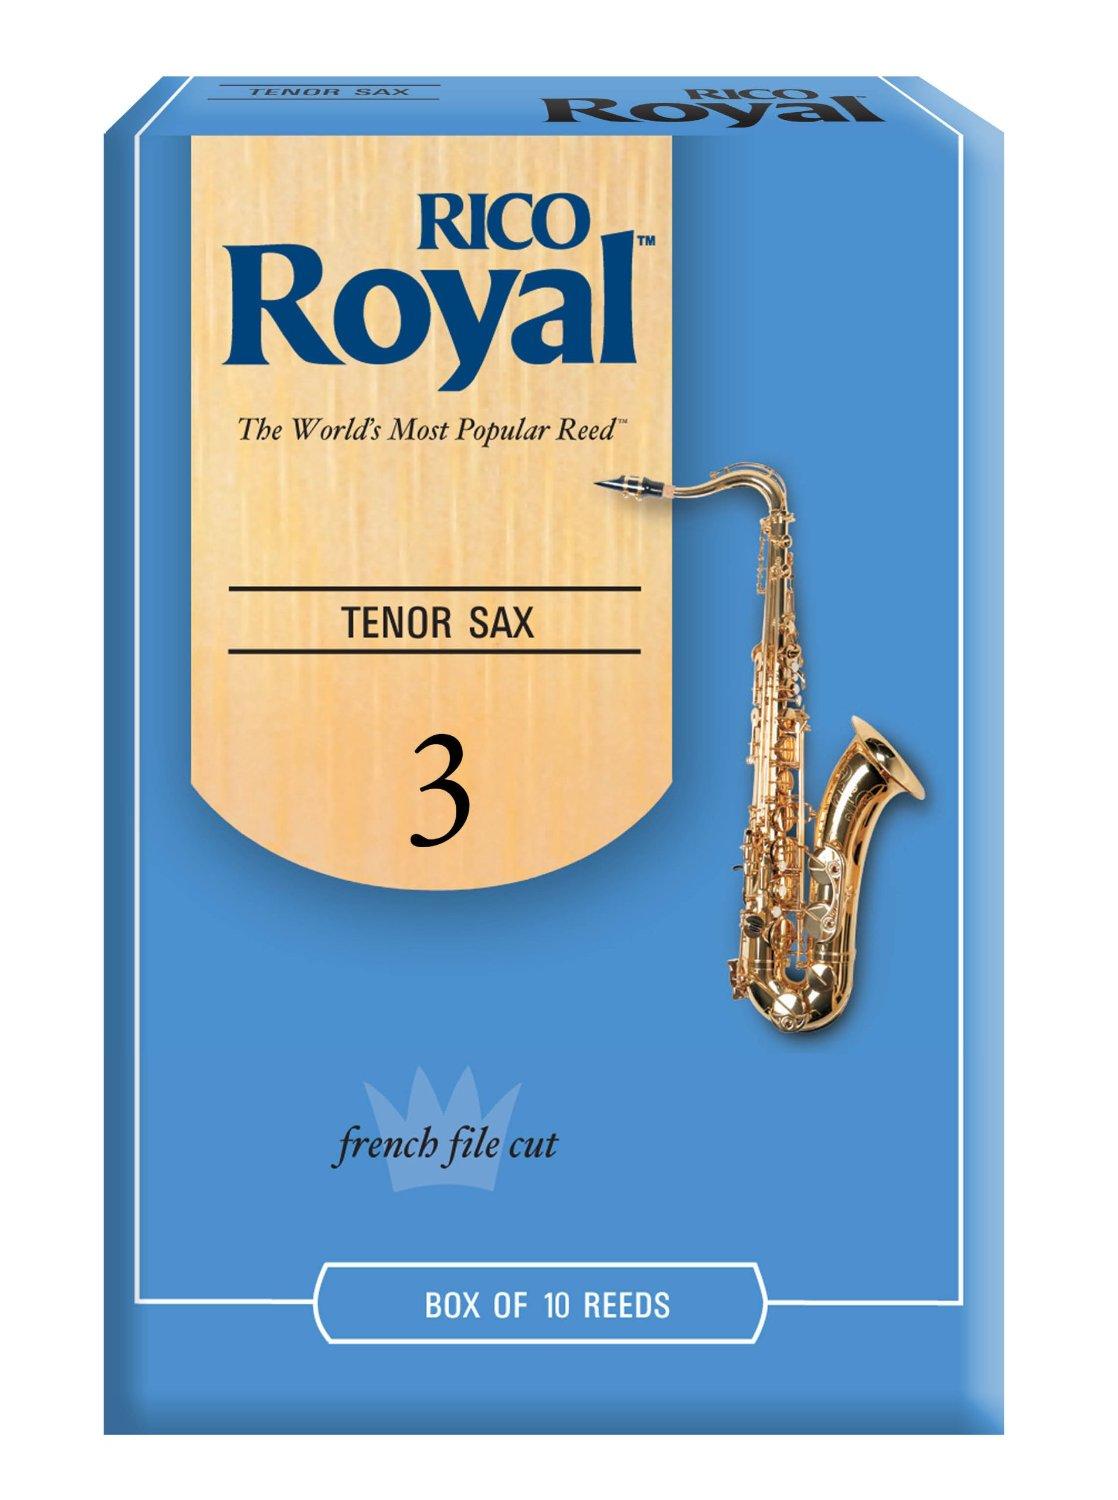 Rico Royal Tenor Sax (French File Cut) Box of 10